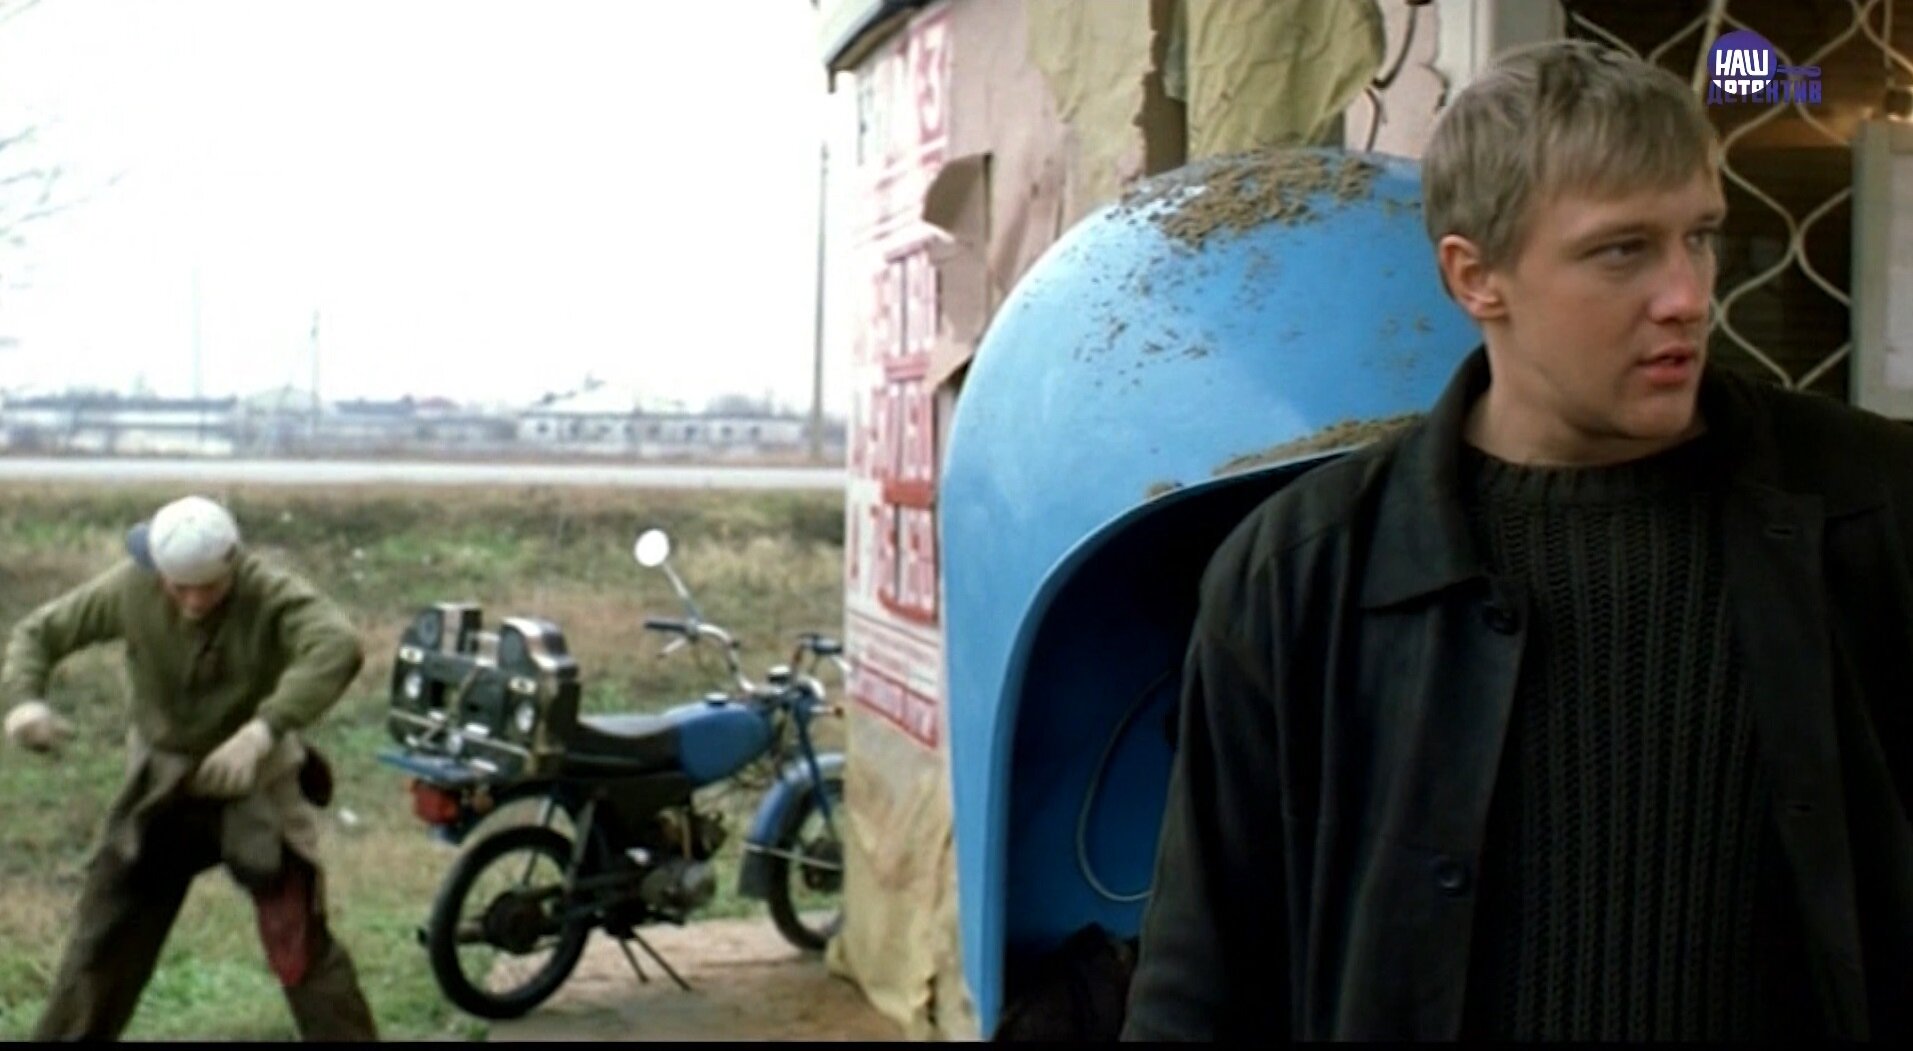 Заправка из фильма «Бумер», на которой герои меняли магнитолу на бензин: как она выглядит сегодня (10 фото)